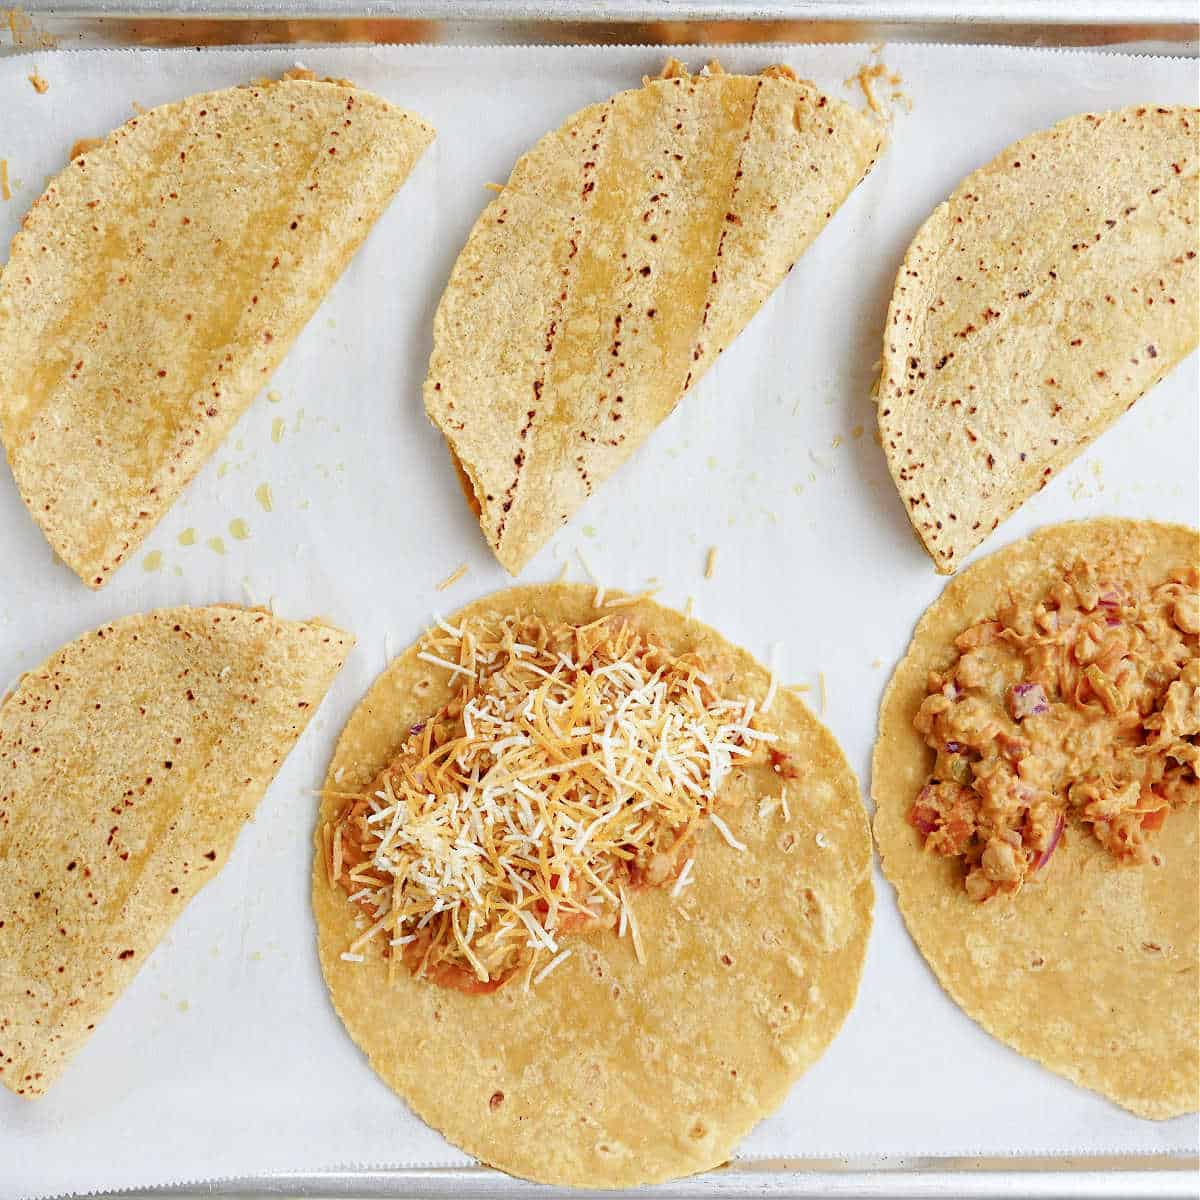 Tortillas on a baking sheet, assembling the buffalo chickpea tacos.